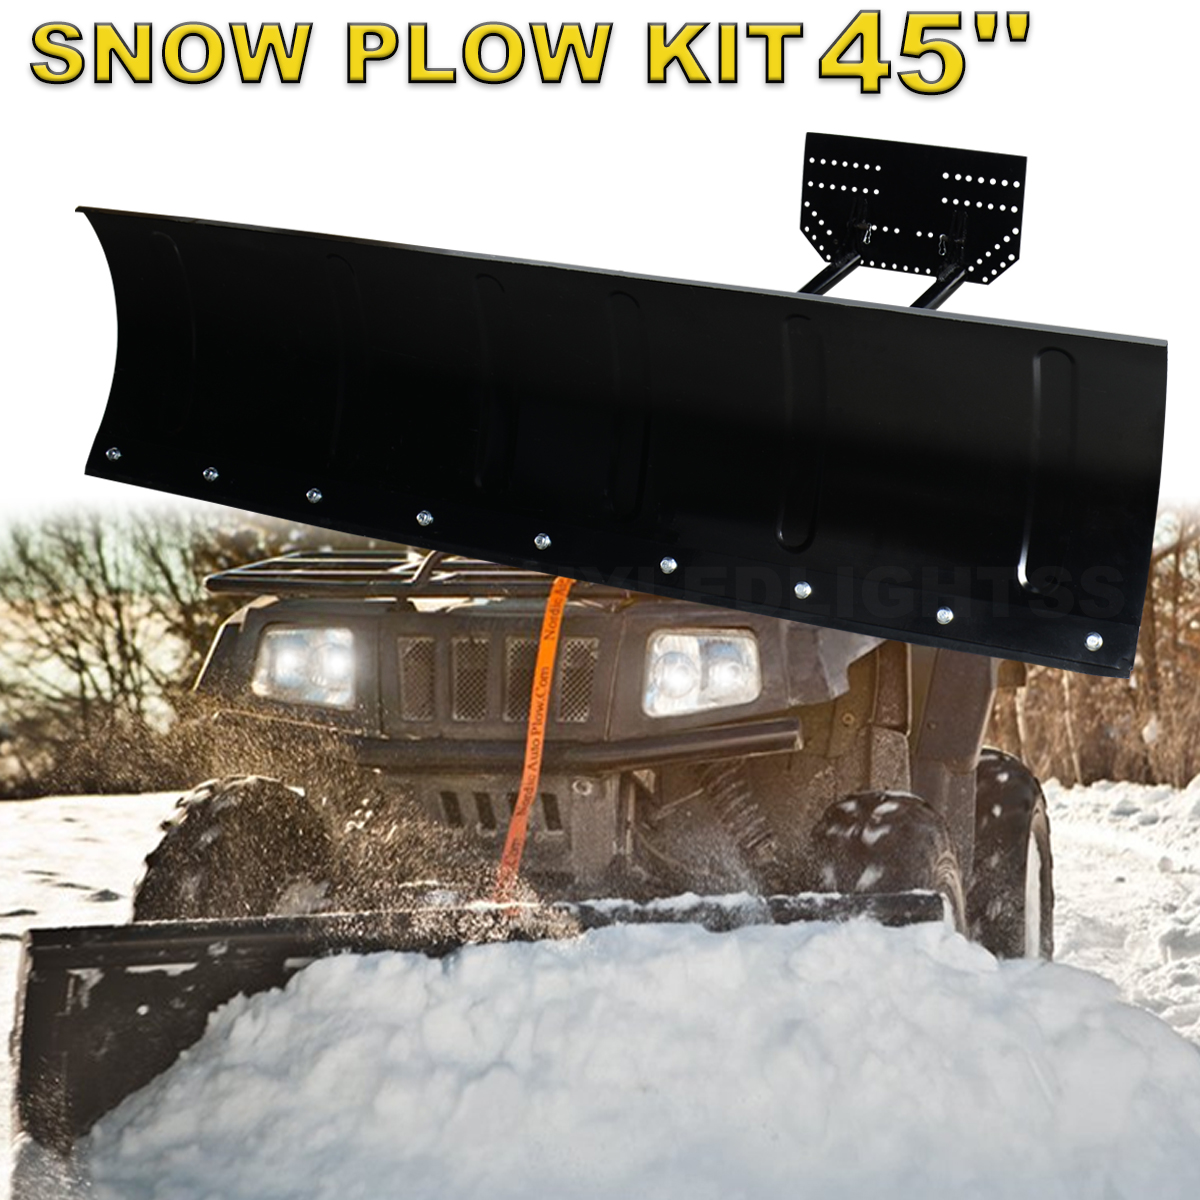 SNOW BLADE FOR QUAD KIT Kymco MXU 300 350 500 700 SNOWPLOW